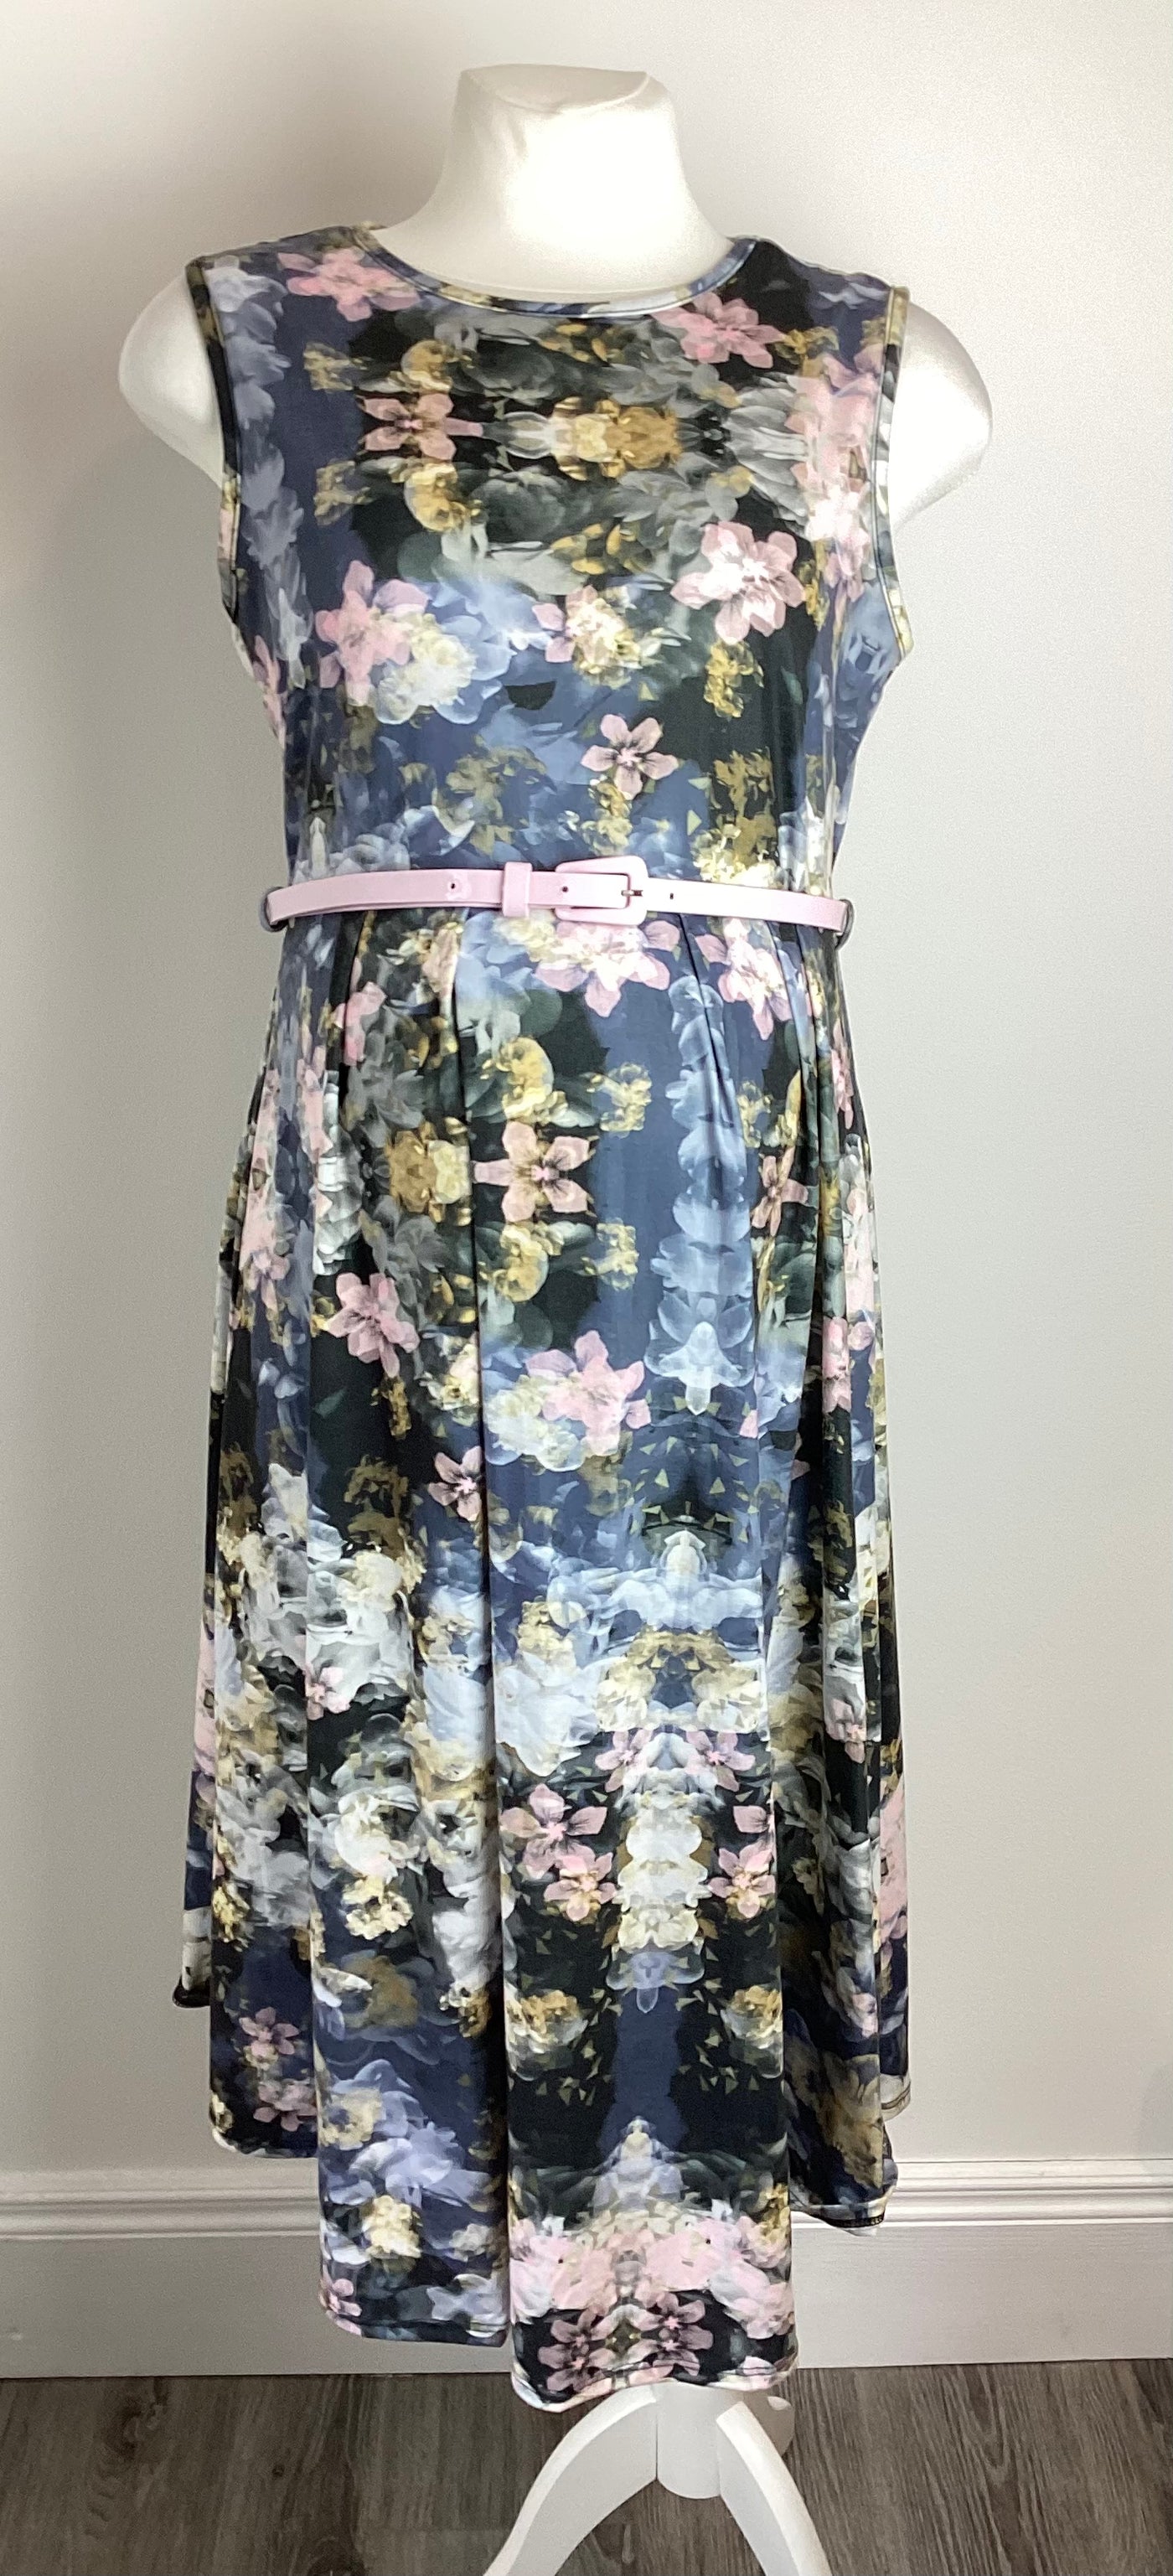 Asos Black, Pink & Blue Floral Sleeveless Dress with Belt - Size 12